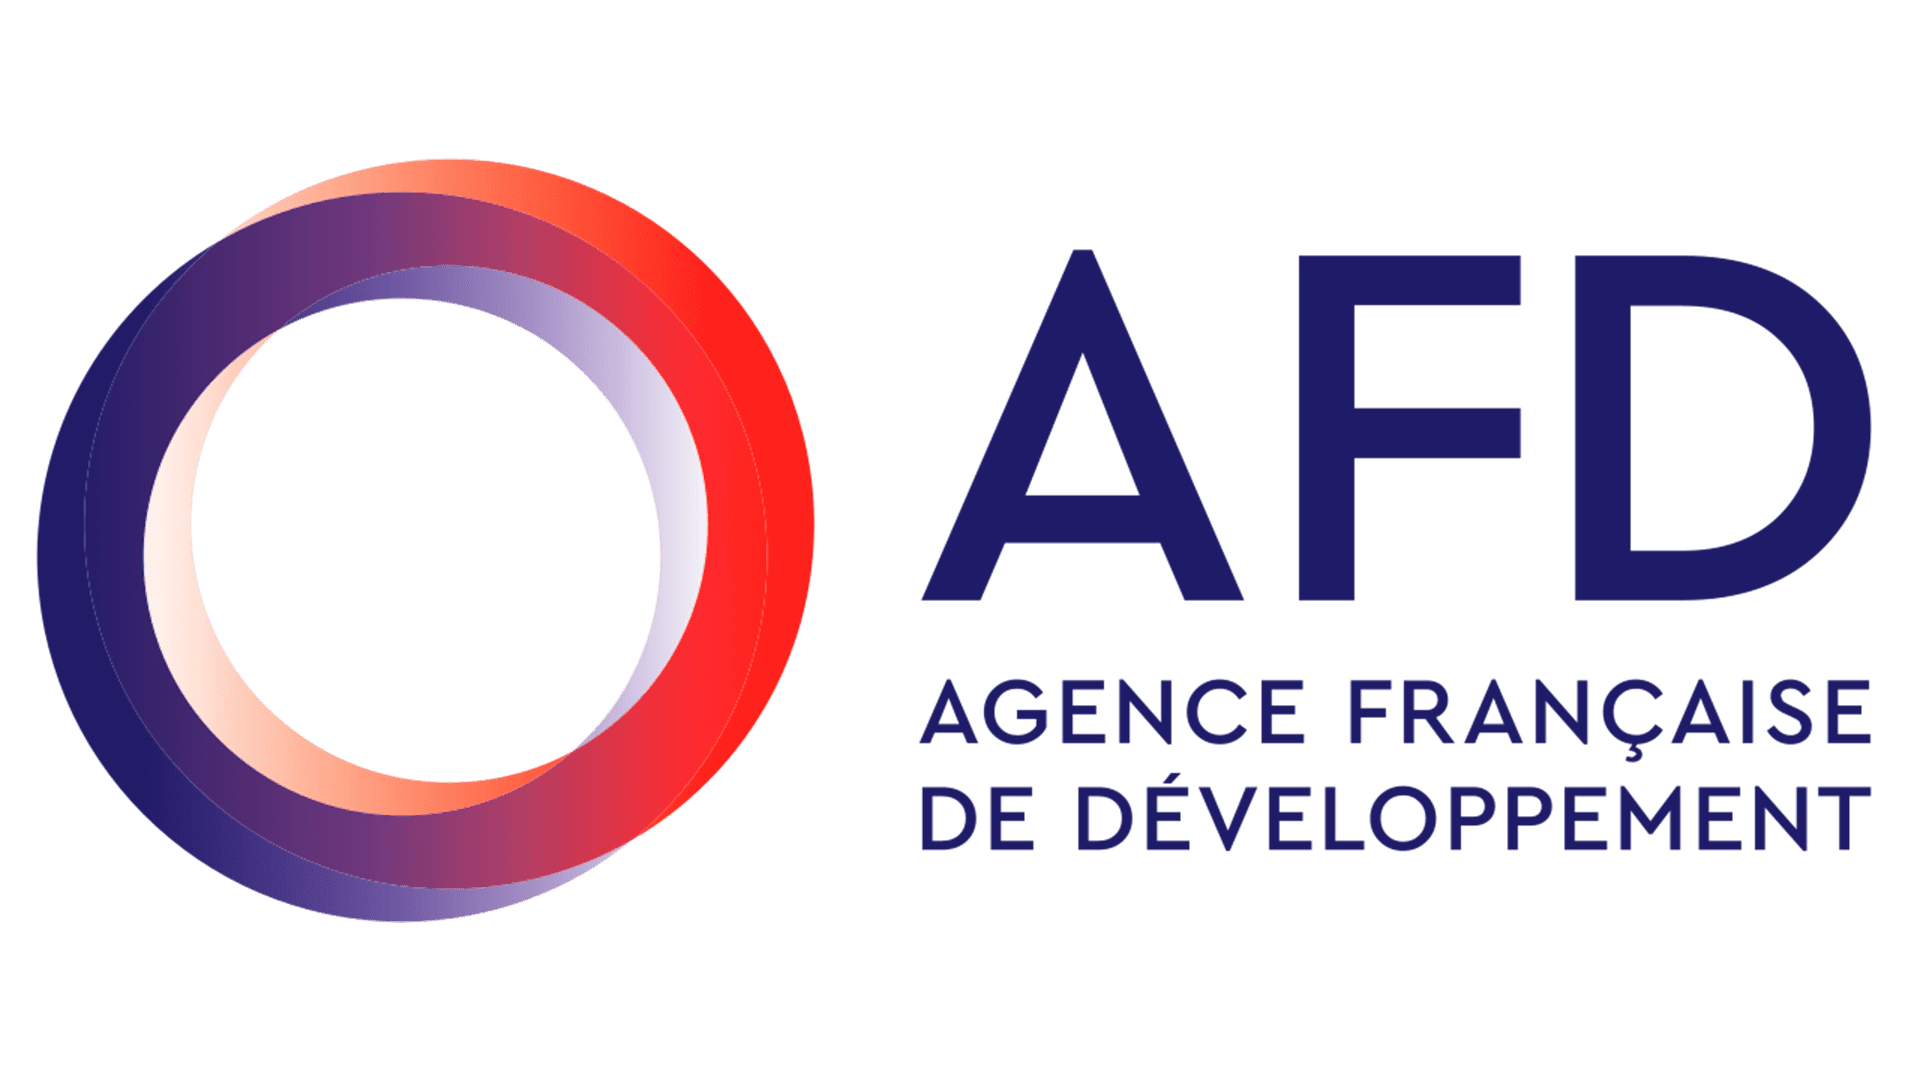 French Development Agency's logo